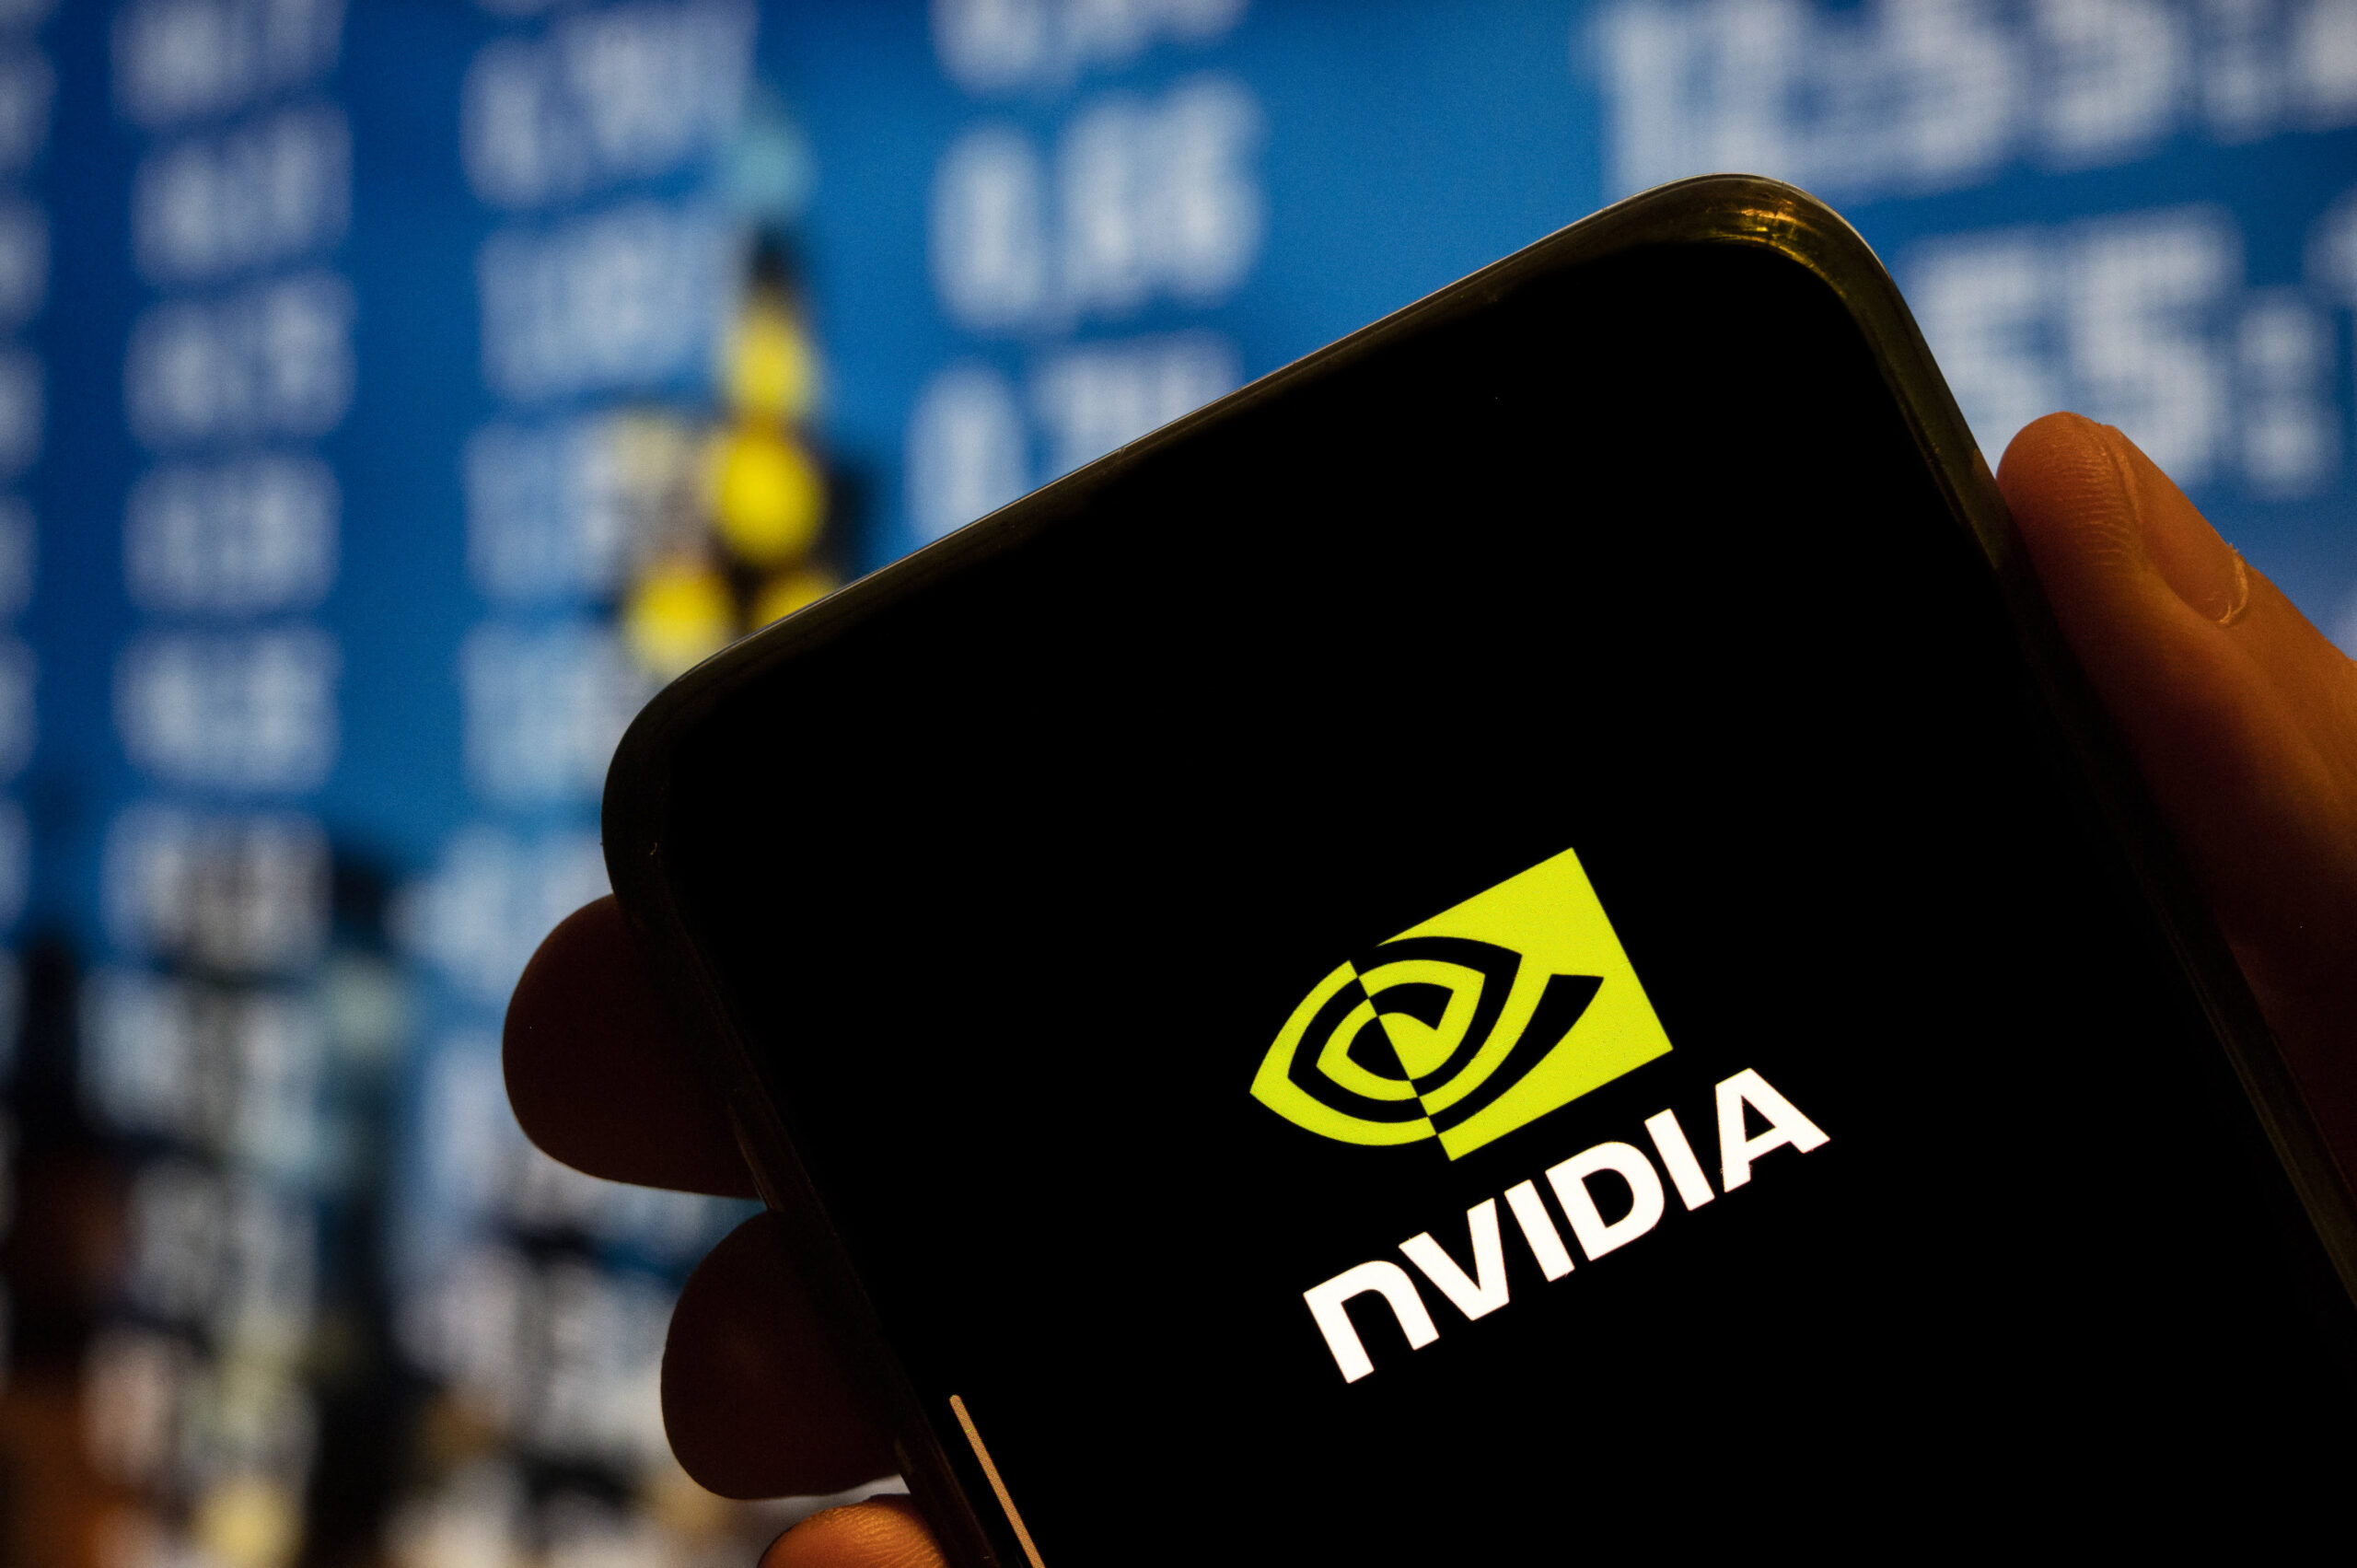 Nvidia announces 10-for-1 stock split amidst AI market surge